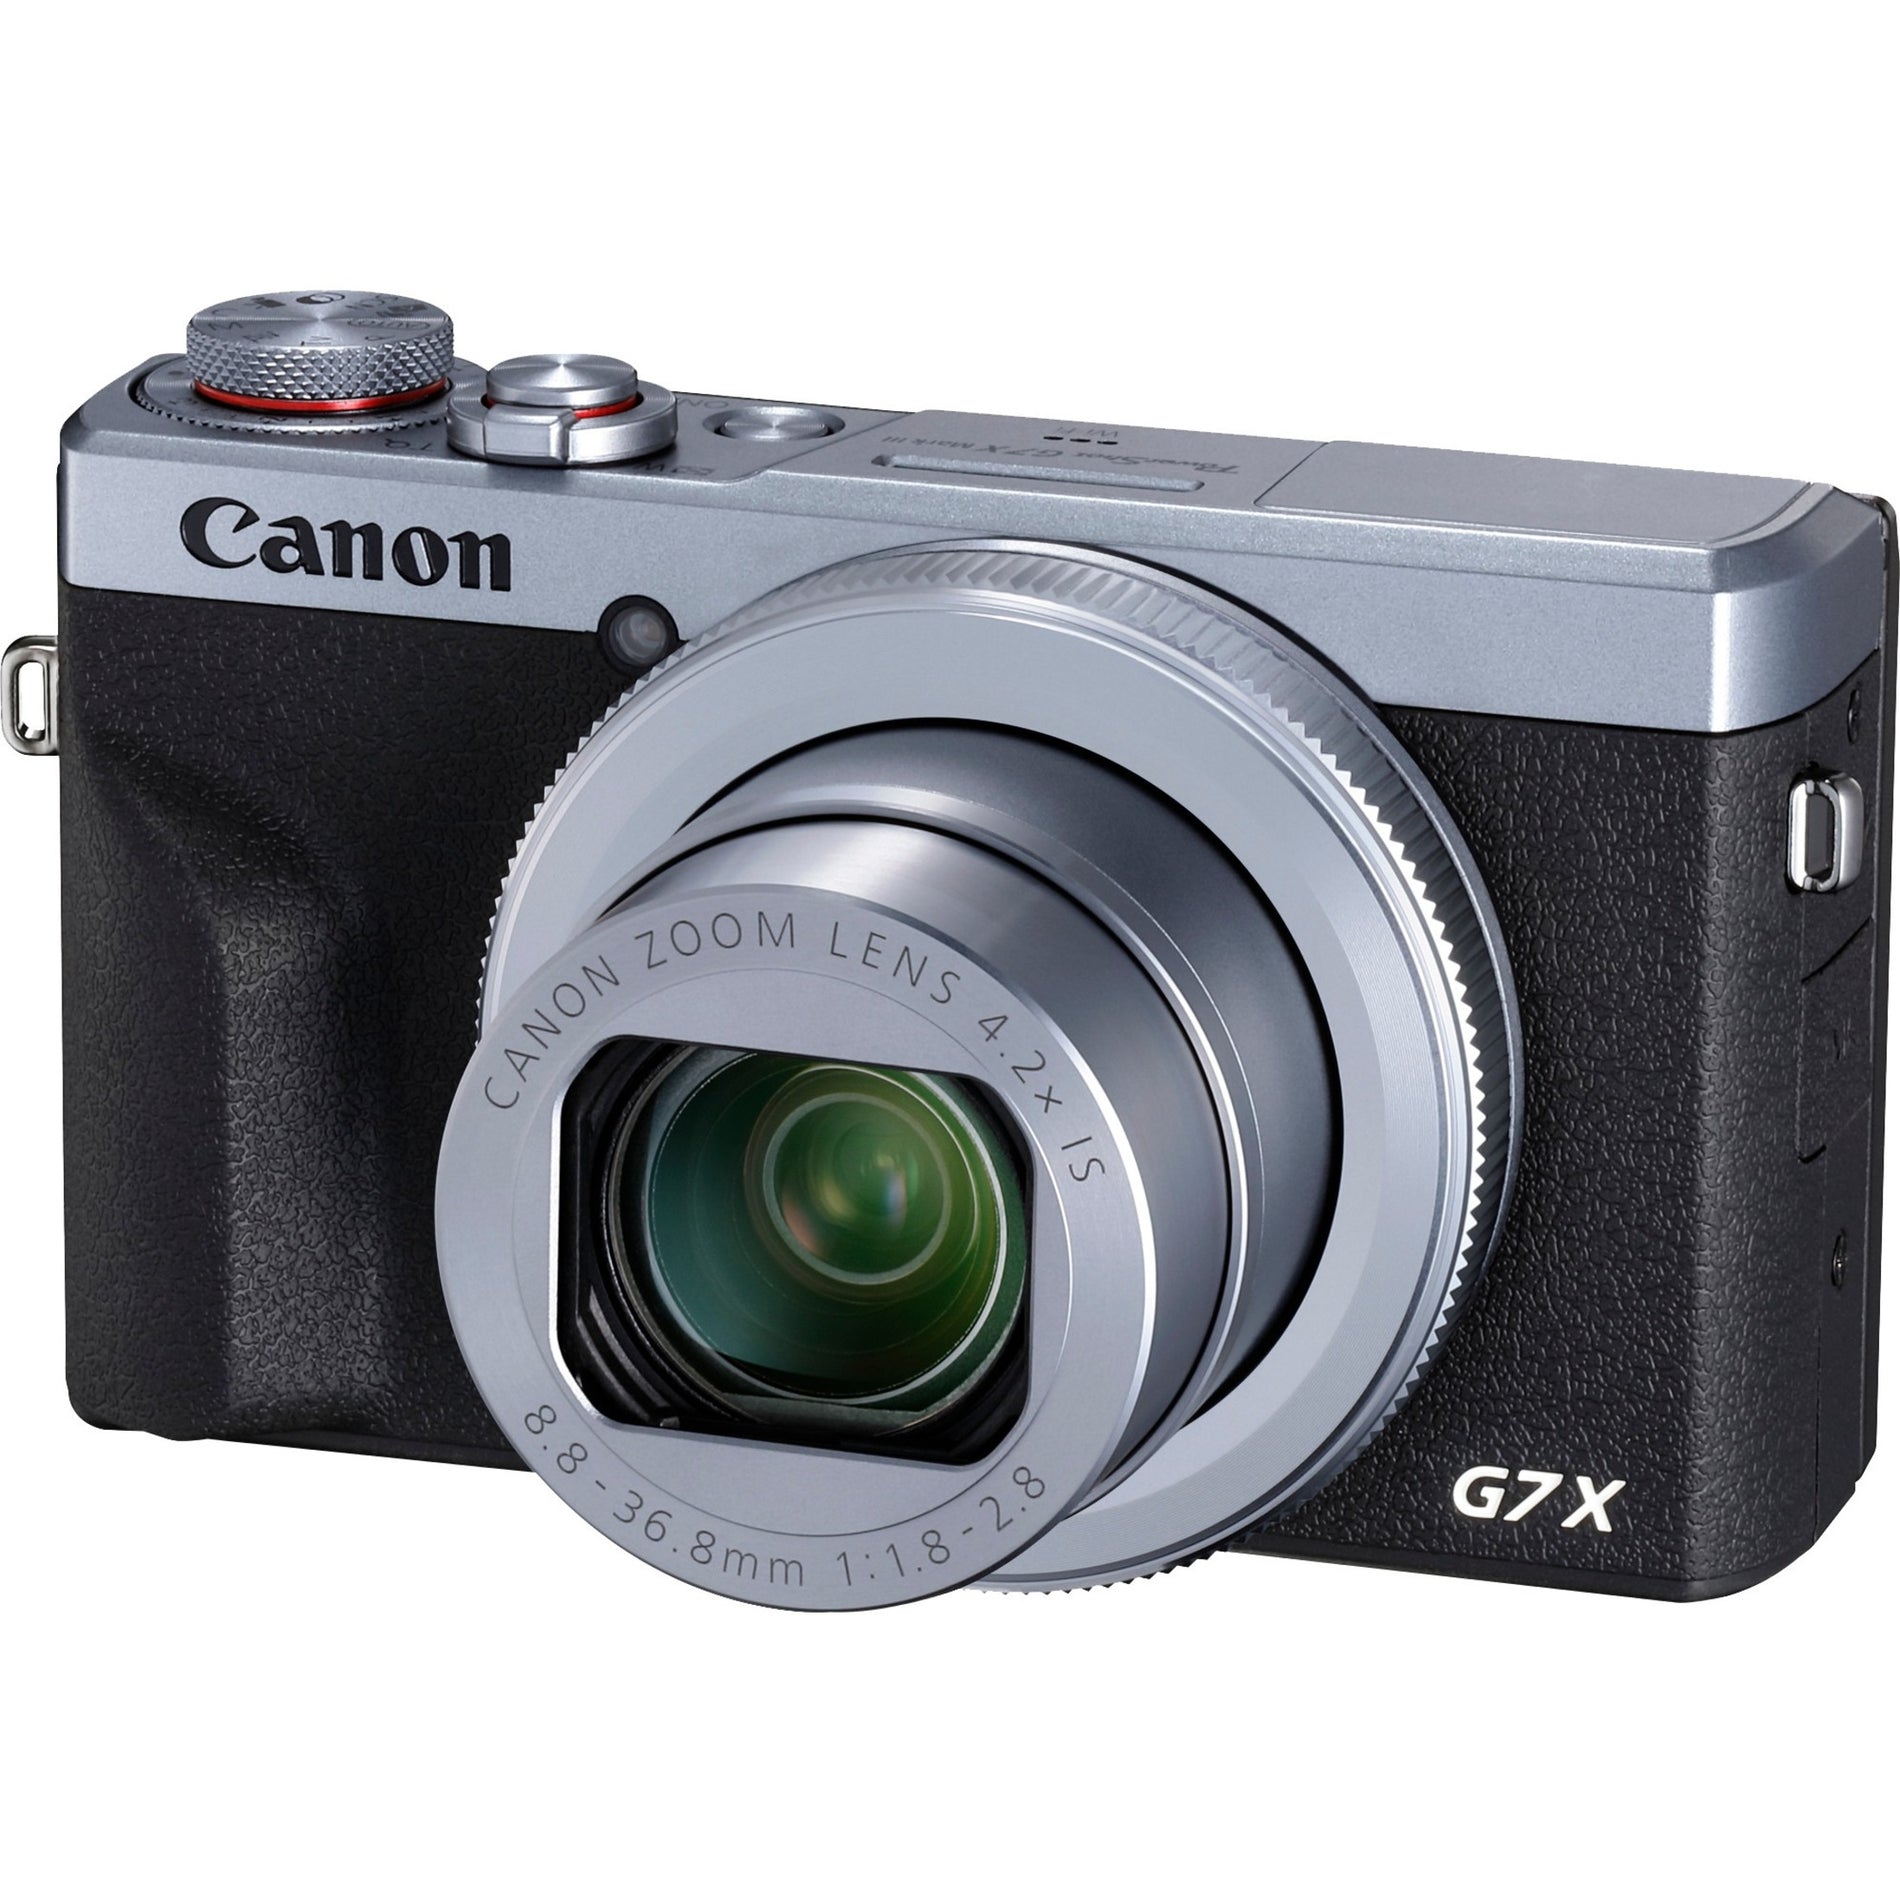 Canon 3638C001 PowerShot G7 X Mark III Compact Camera, 20.1 Megapixel, 4.2x Optical Zoom, 4x Digital Zoom, Silver